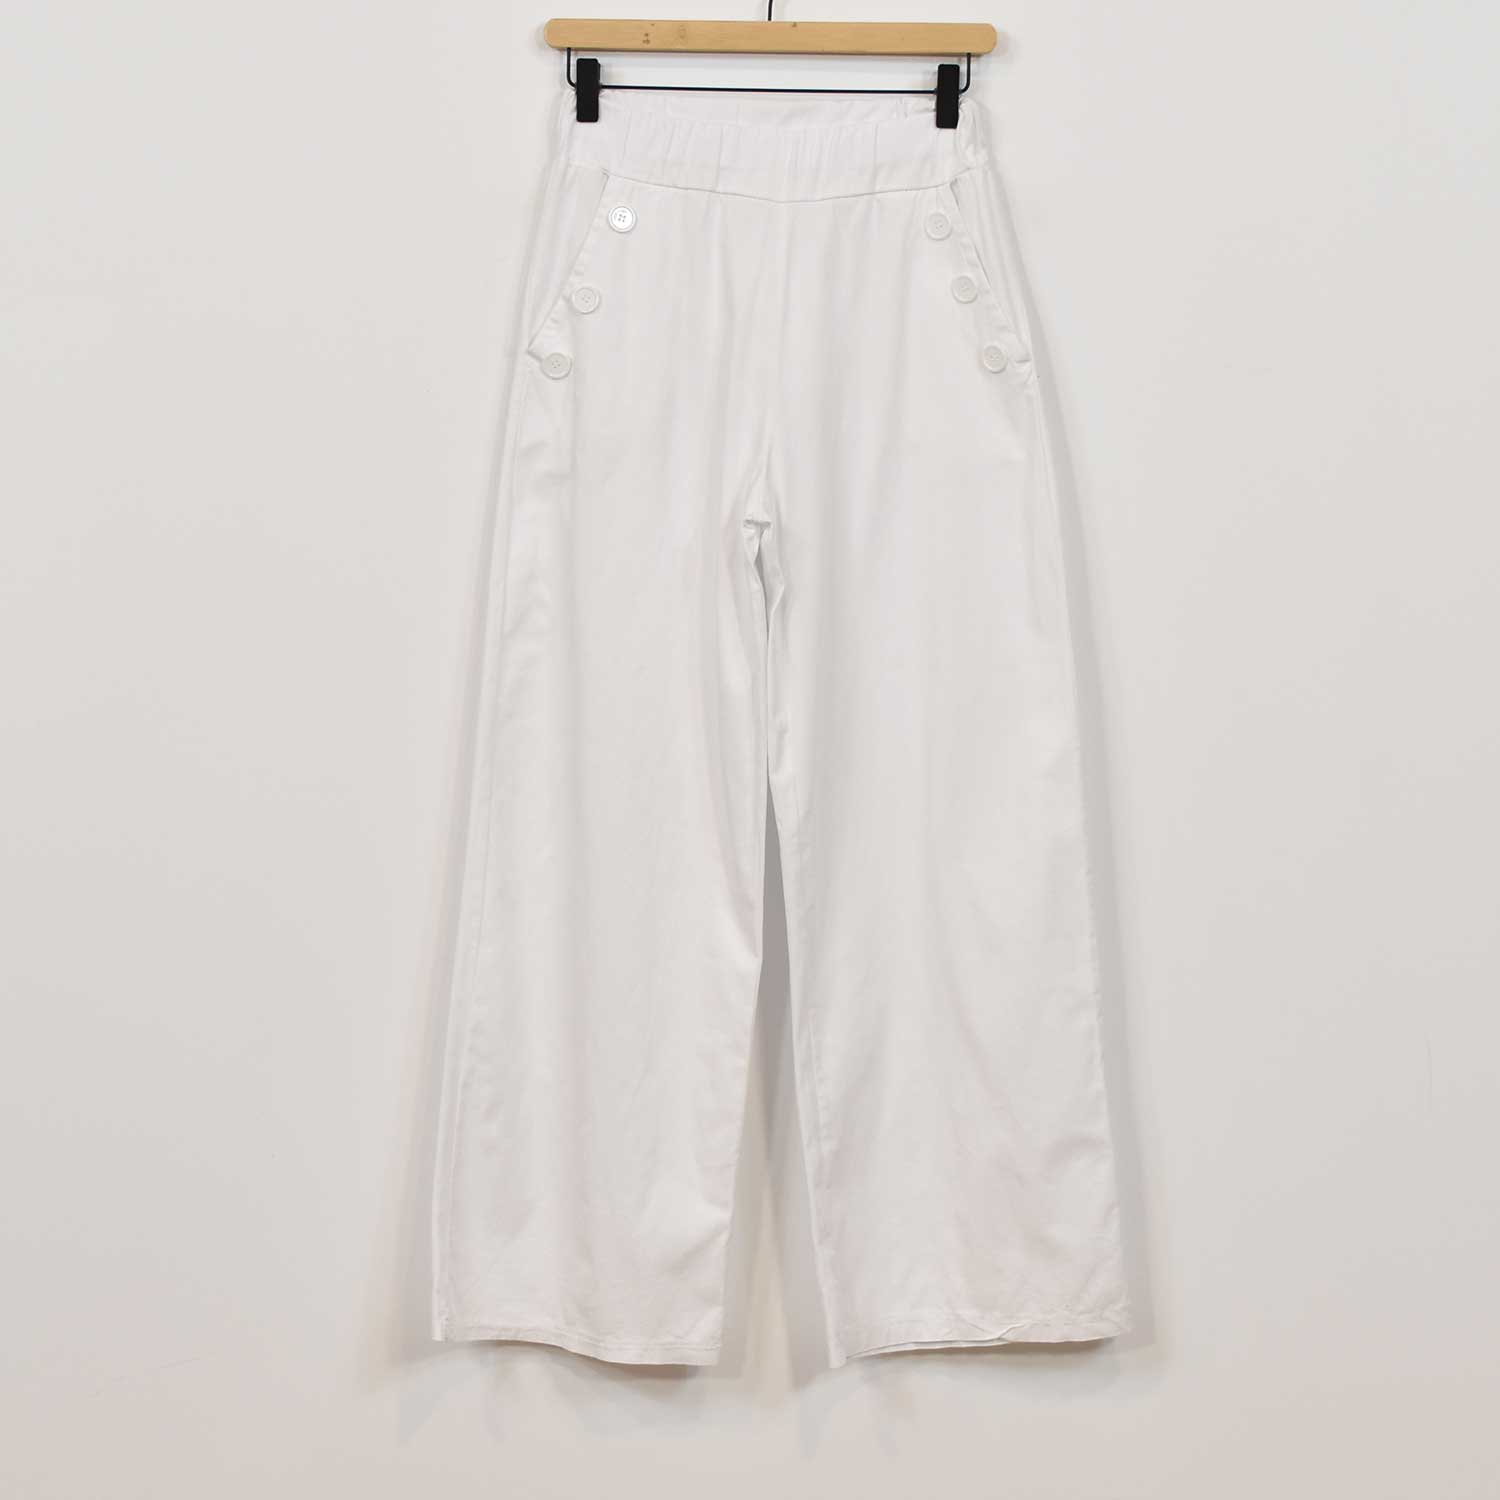 White Navy pants